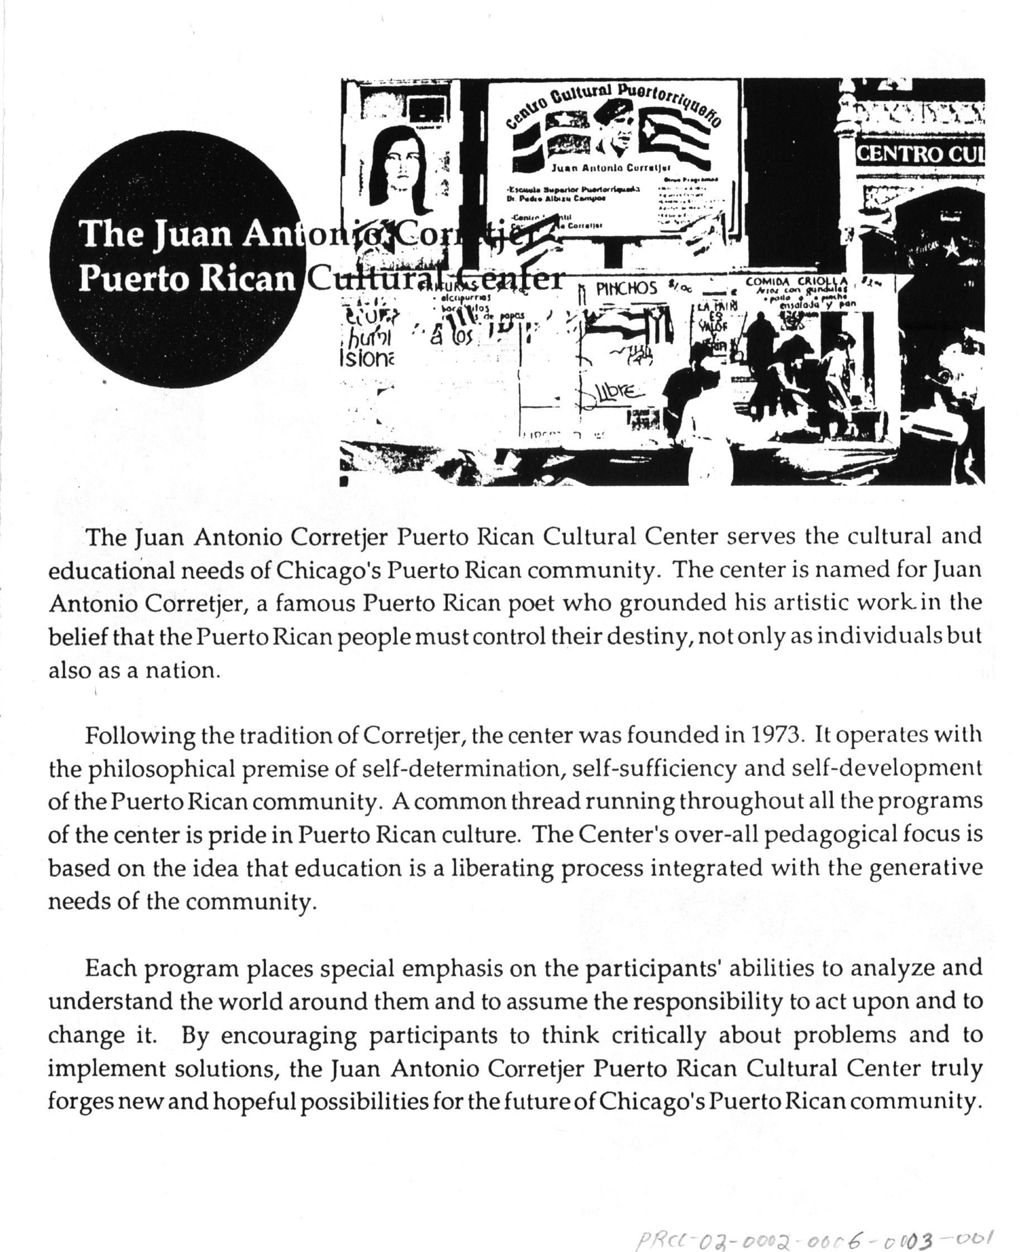 Miniature of Juan Antonio Corretjer Puerto Rican Cultural Center Flyer